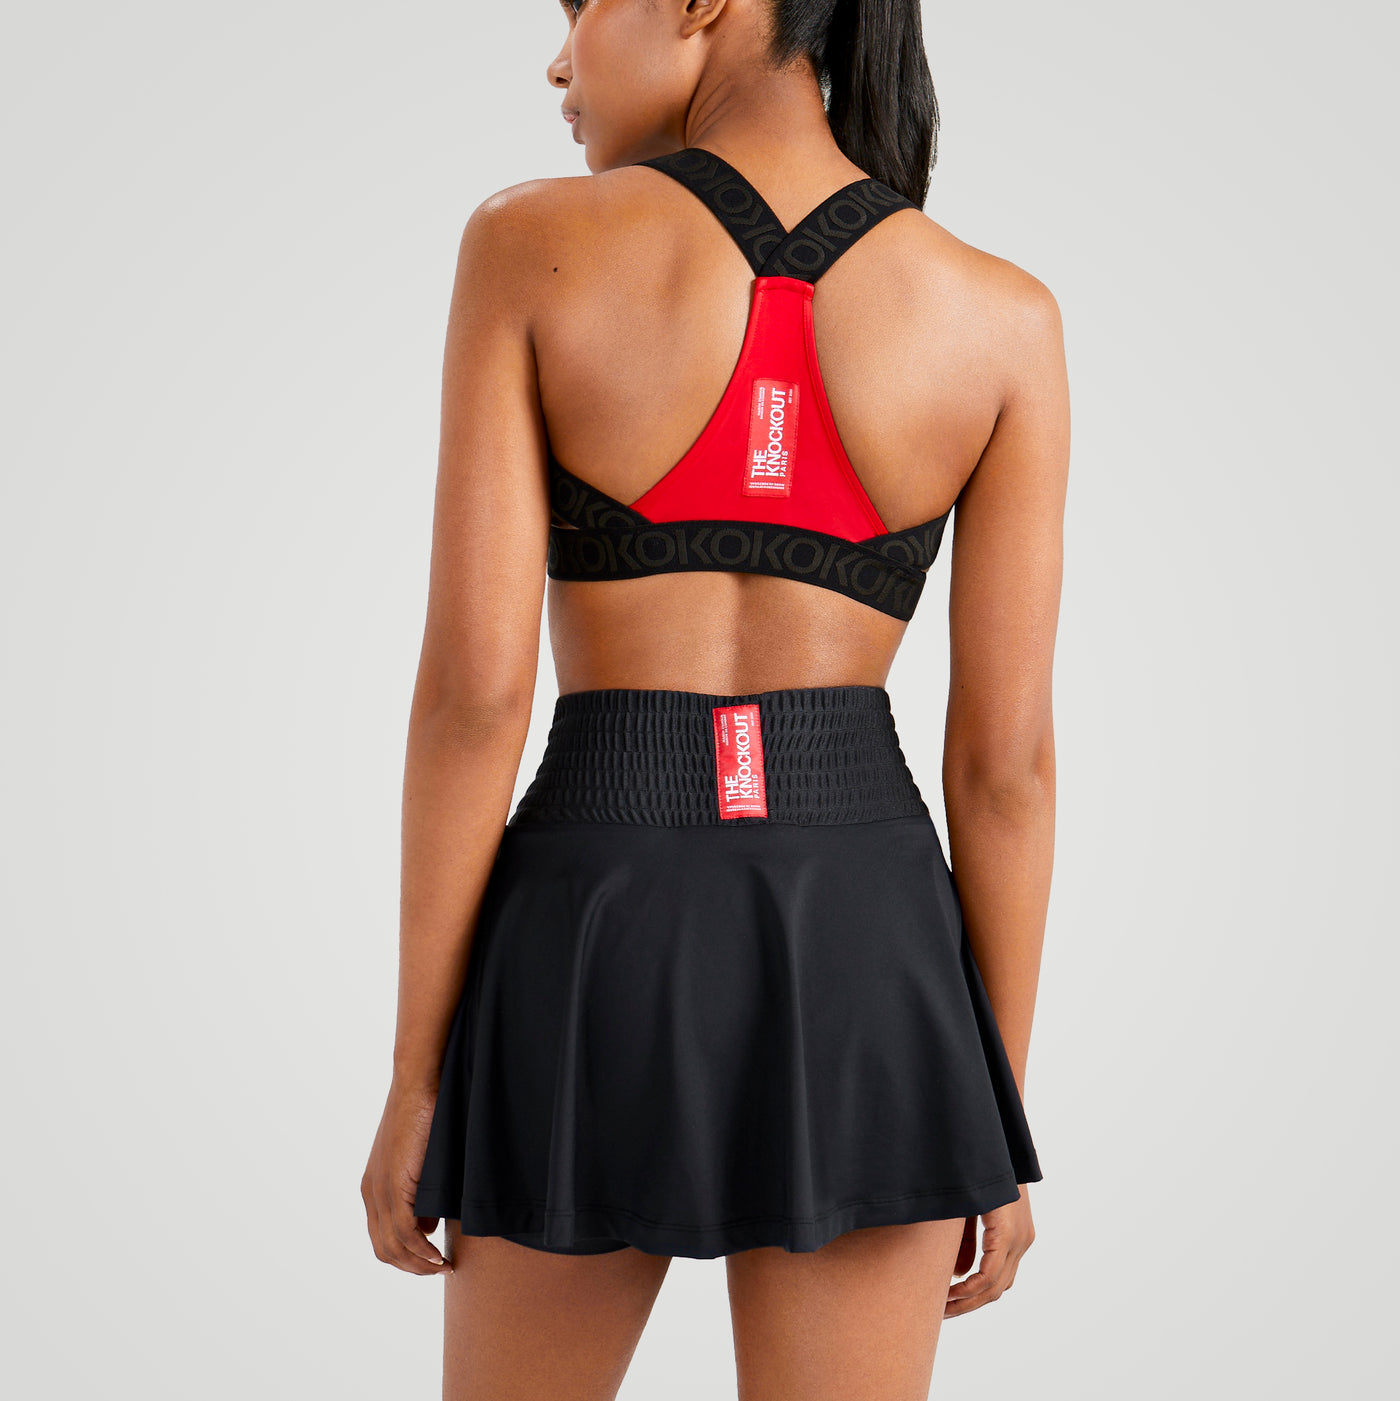 The Fighting Skirt in Black - Redd Edition